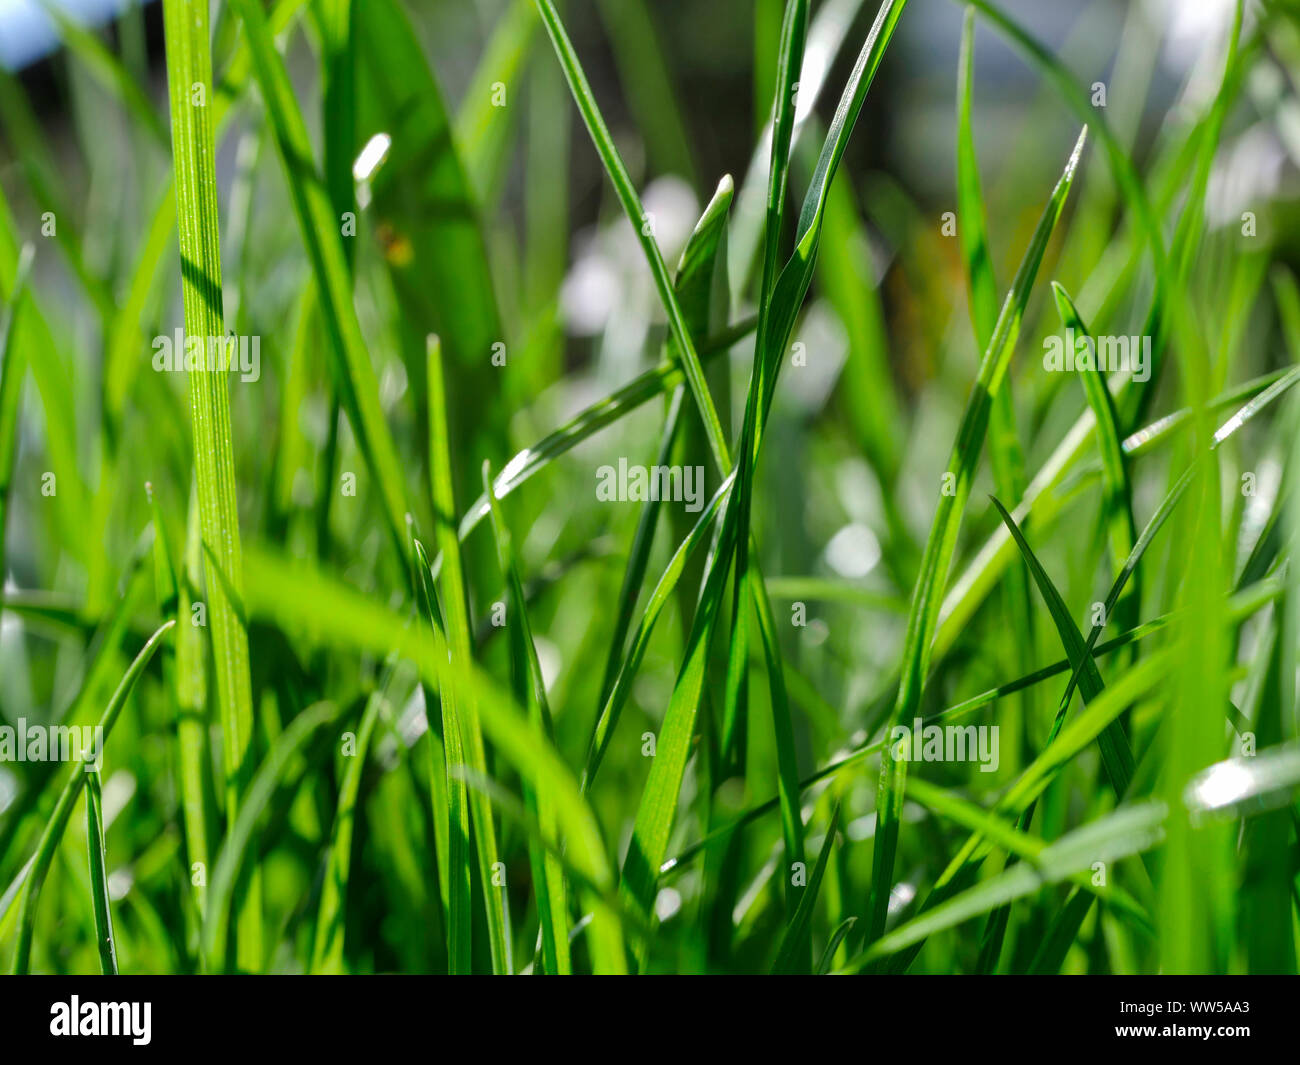 Green turf, blades of grass Stock Photo